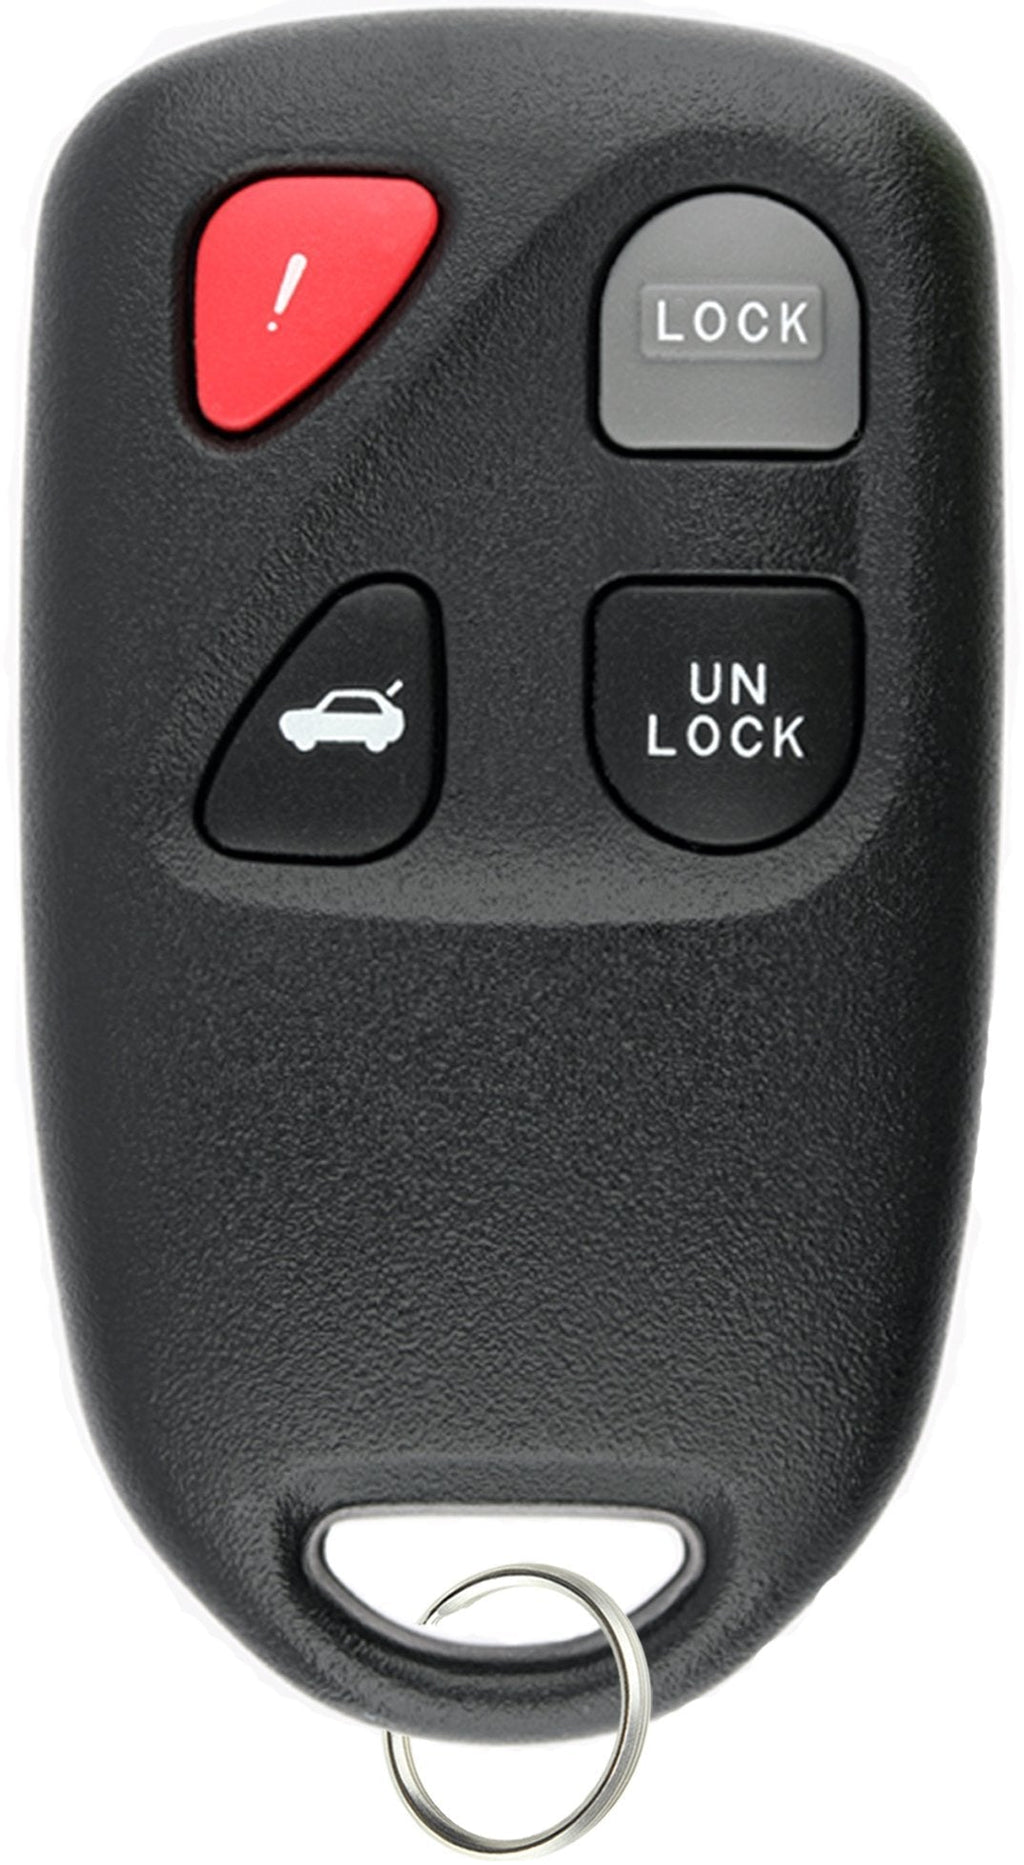 KeylessOption Keyless Entry Remote Control Car Key Fob Clicker for KPU41805 Model 41805 Mazda 6